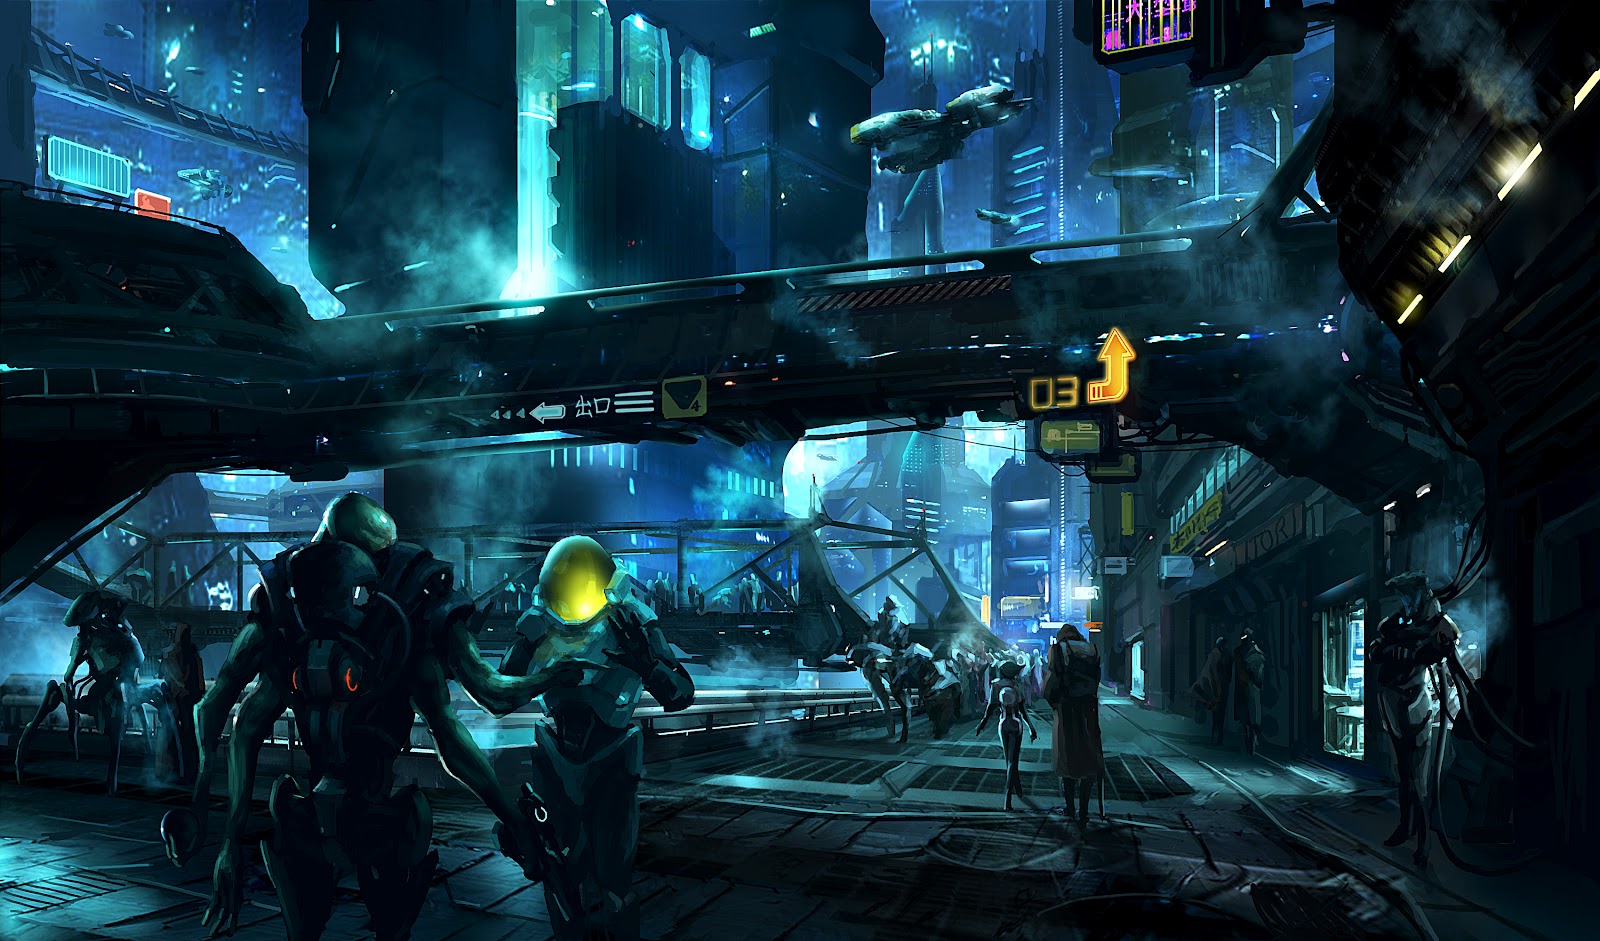 Sci fi games. Sci-Fi Art город киберпанк. Cyberpunk Concept Art город. Sci Fi Cyberpunk улица арт. Киберпанк концепт арт окружения.